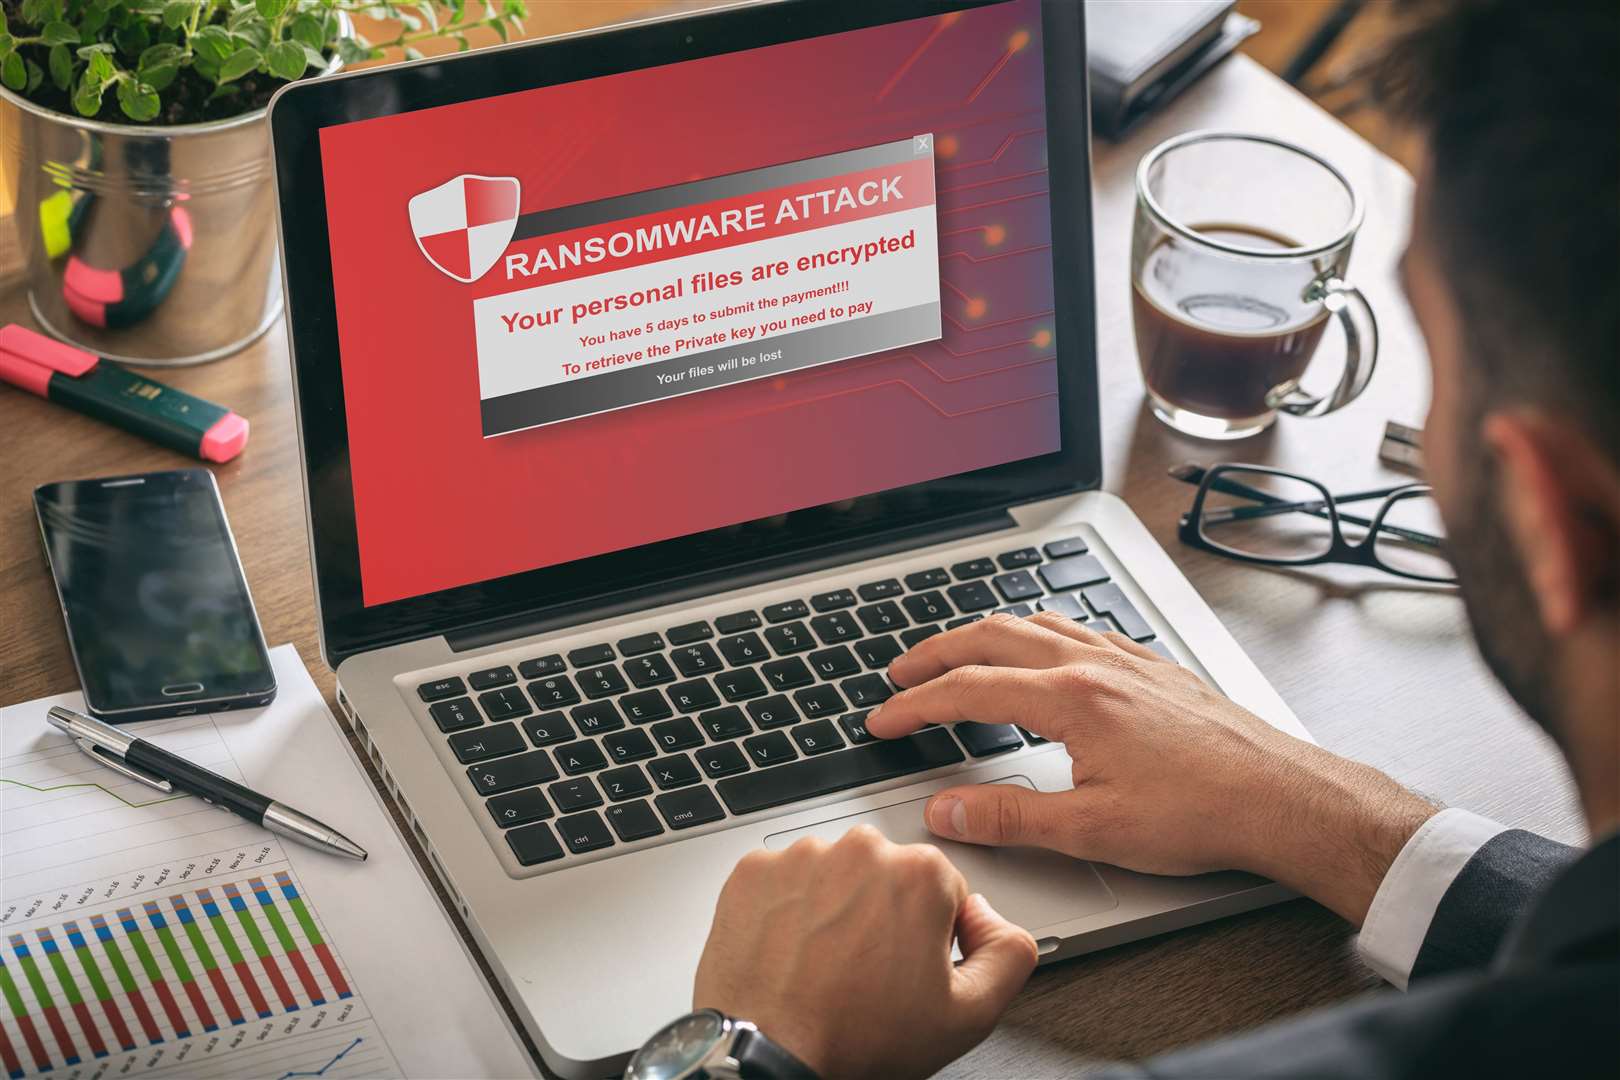 Ransomware alert message on a laptop screen.